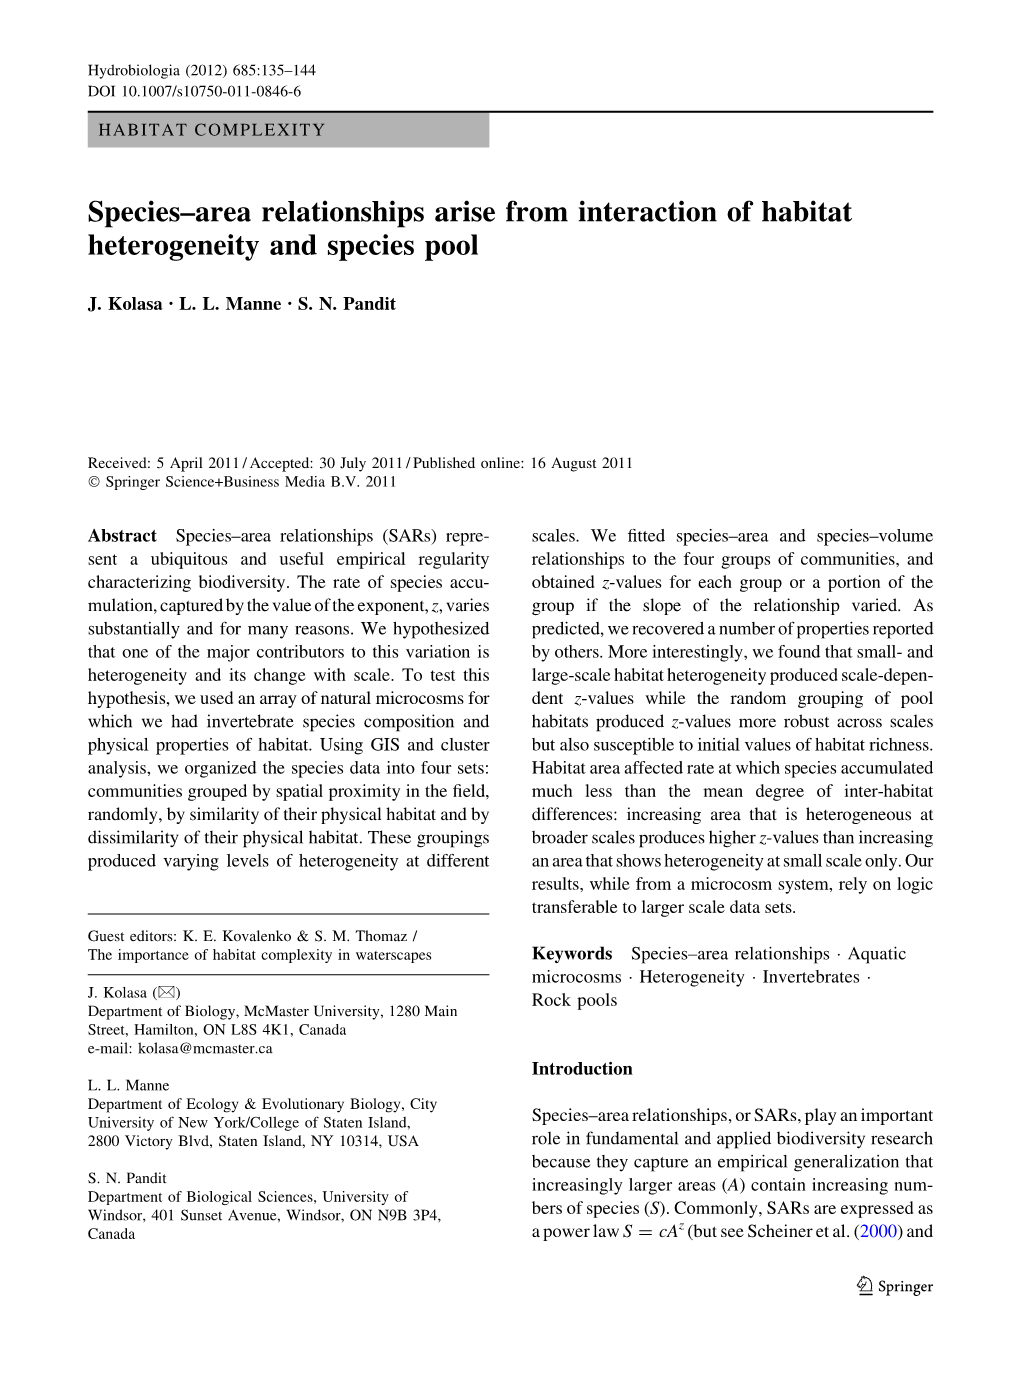 Species–Area Relationships Arise from Interaction of Habitat Heterogeneity and Species Pool